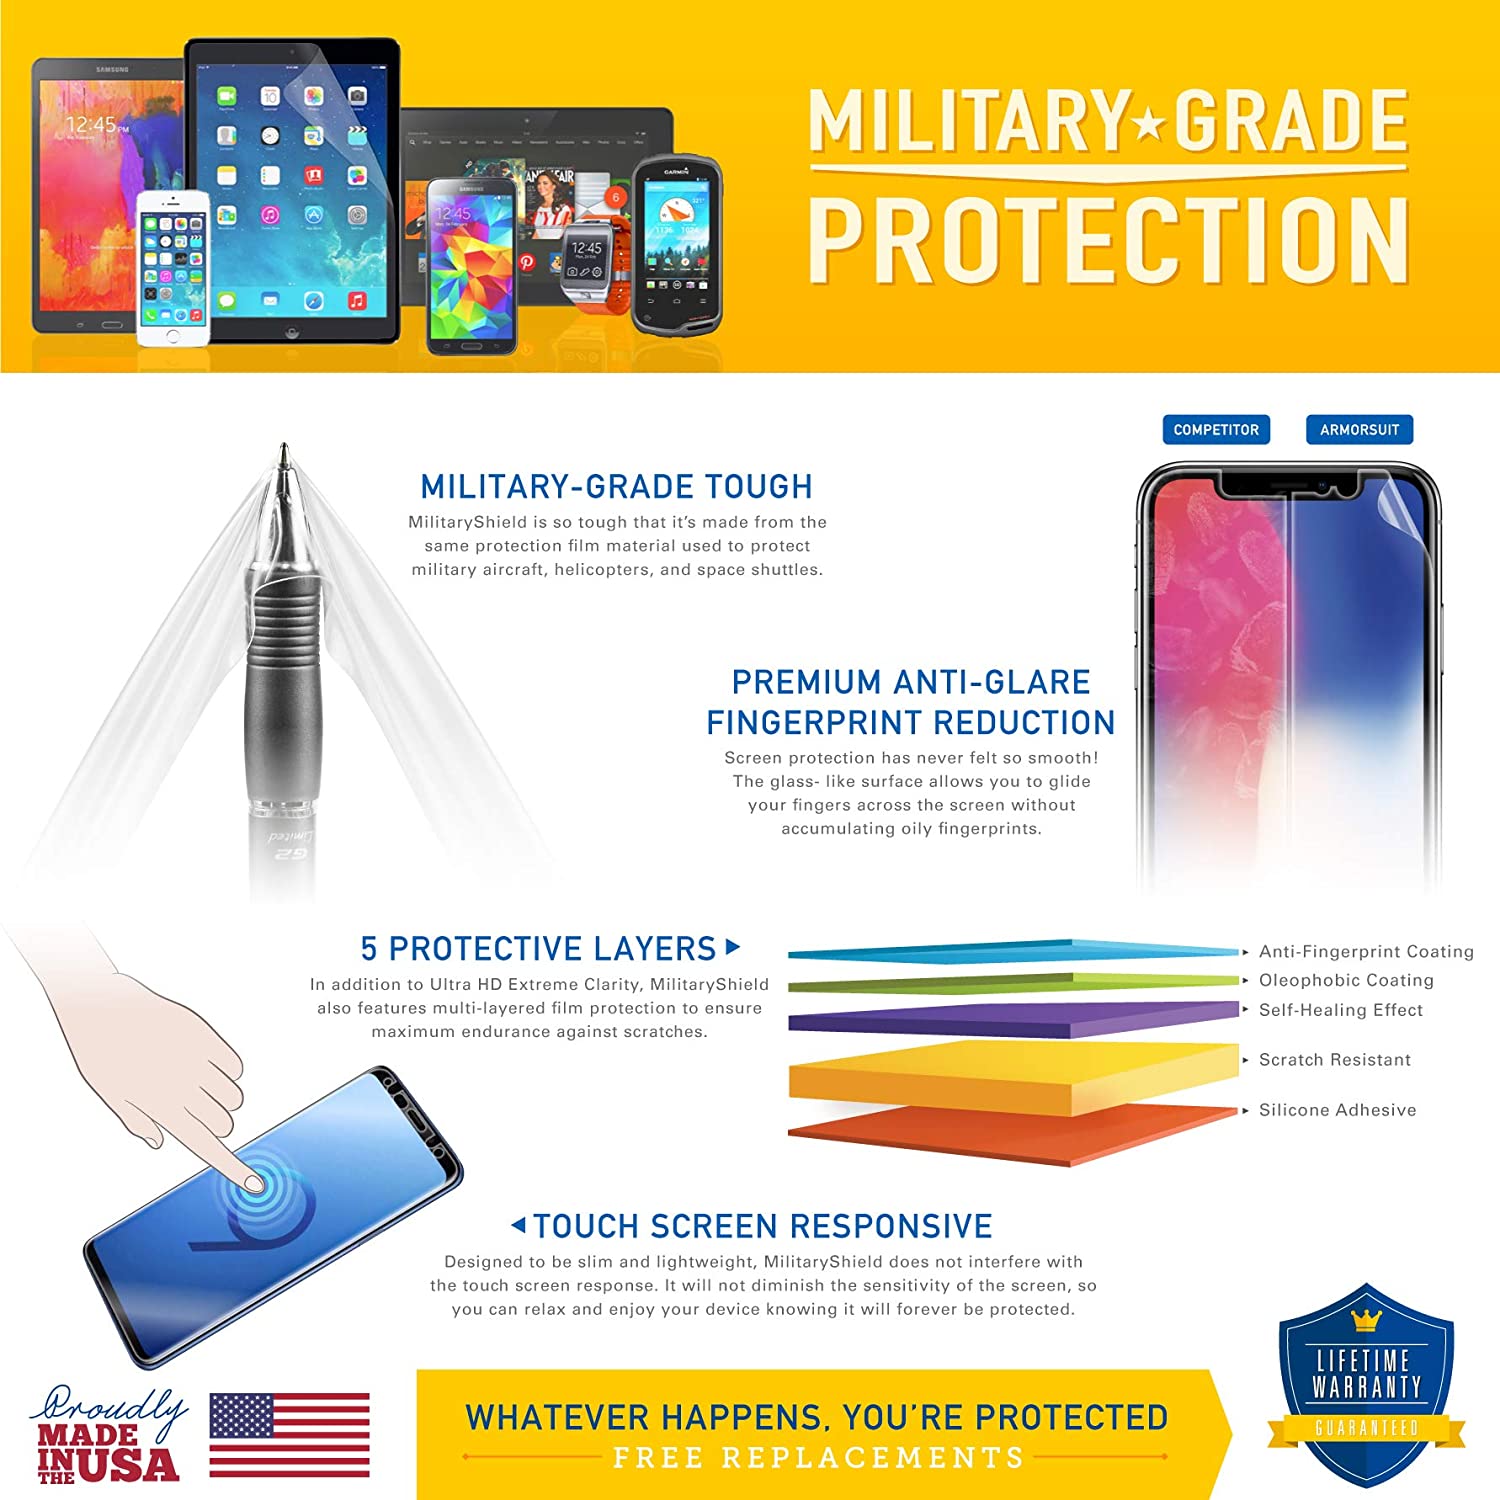 Samsung Galaxy S7 Full Body Skin Protector